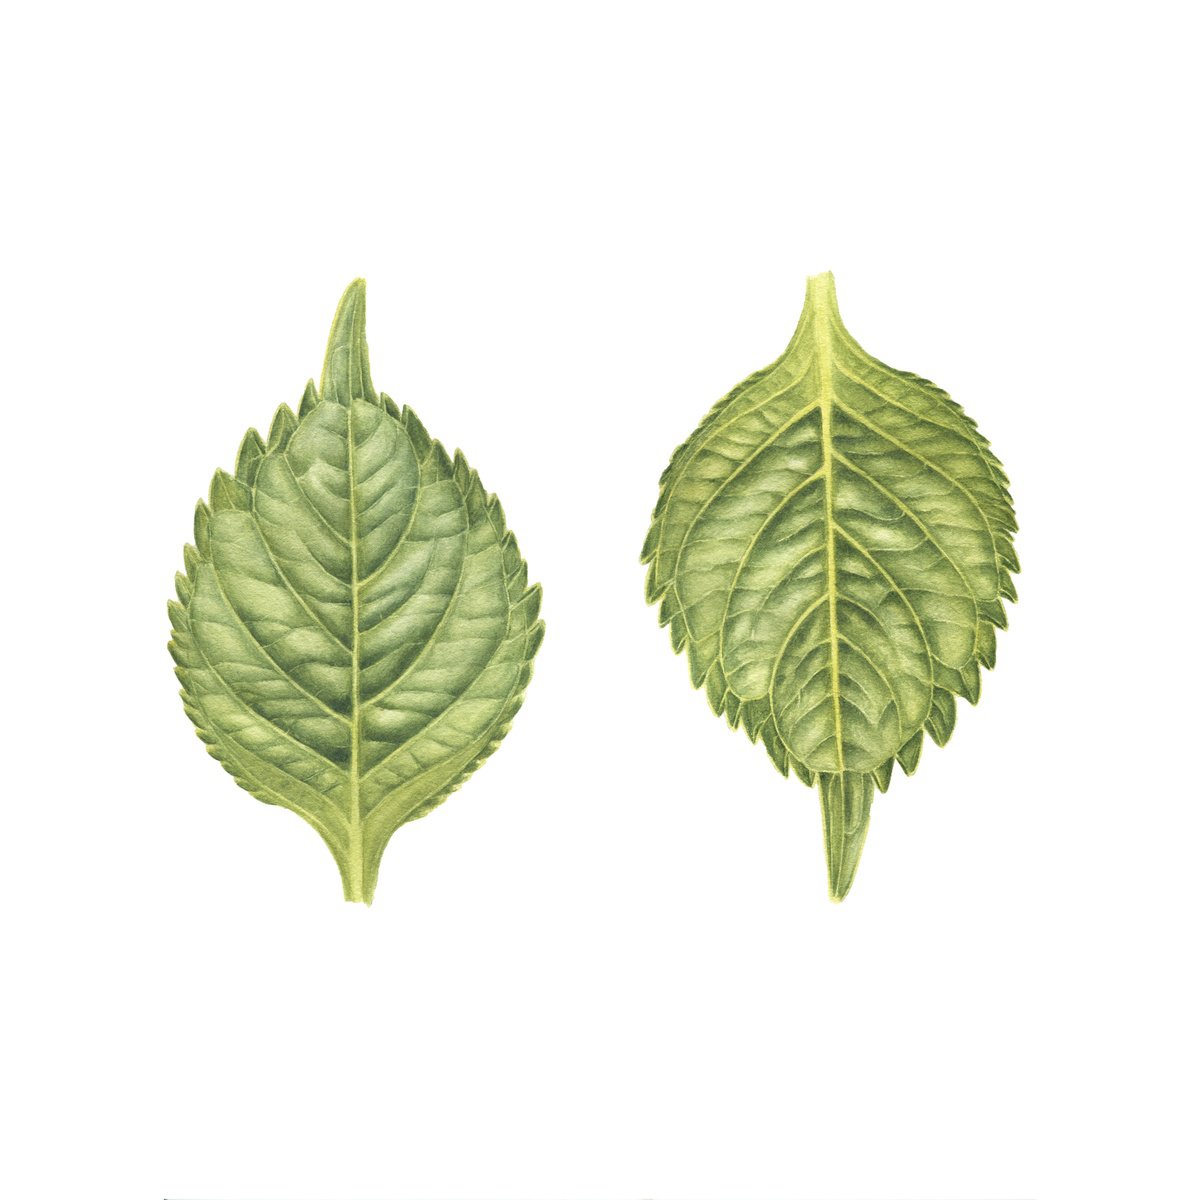 Green leaves of Hydrangea by Alona Hrinchuk